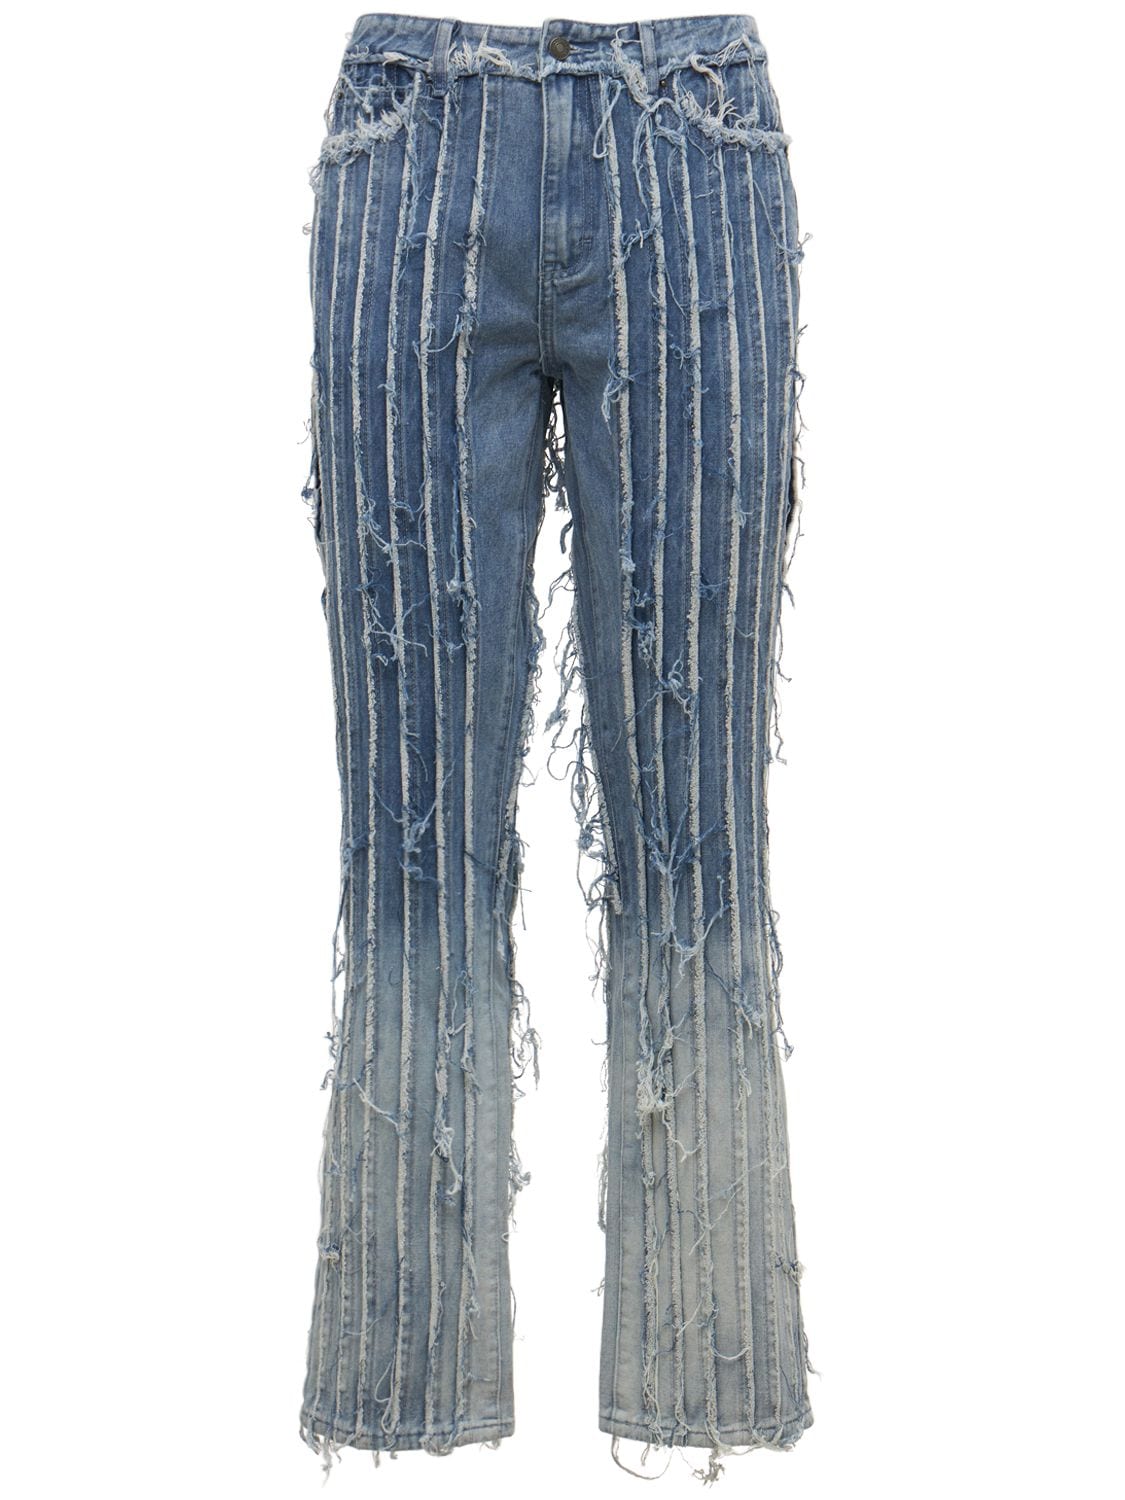 JADED LONDON Jeans | ModeSens